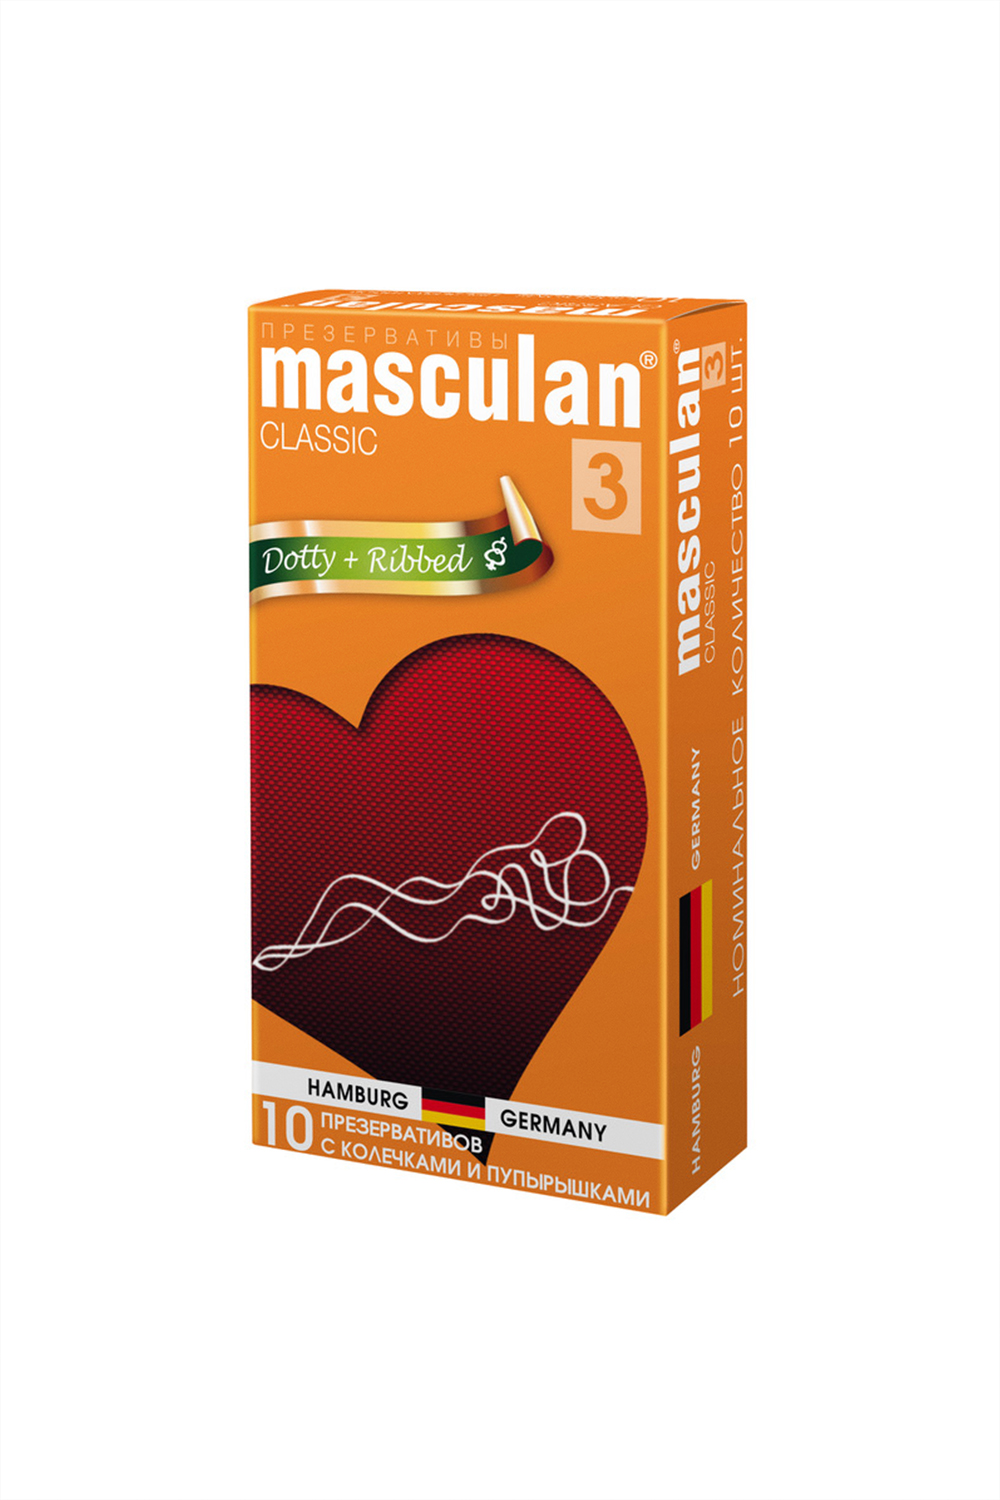 Презервативы Masculan Classic 3 Doty кольца розовые 19 см 10 шт